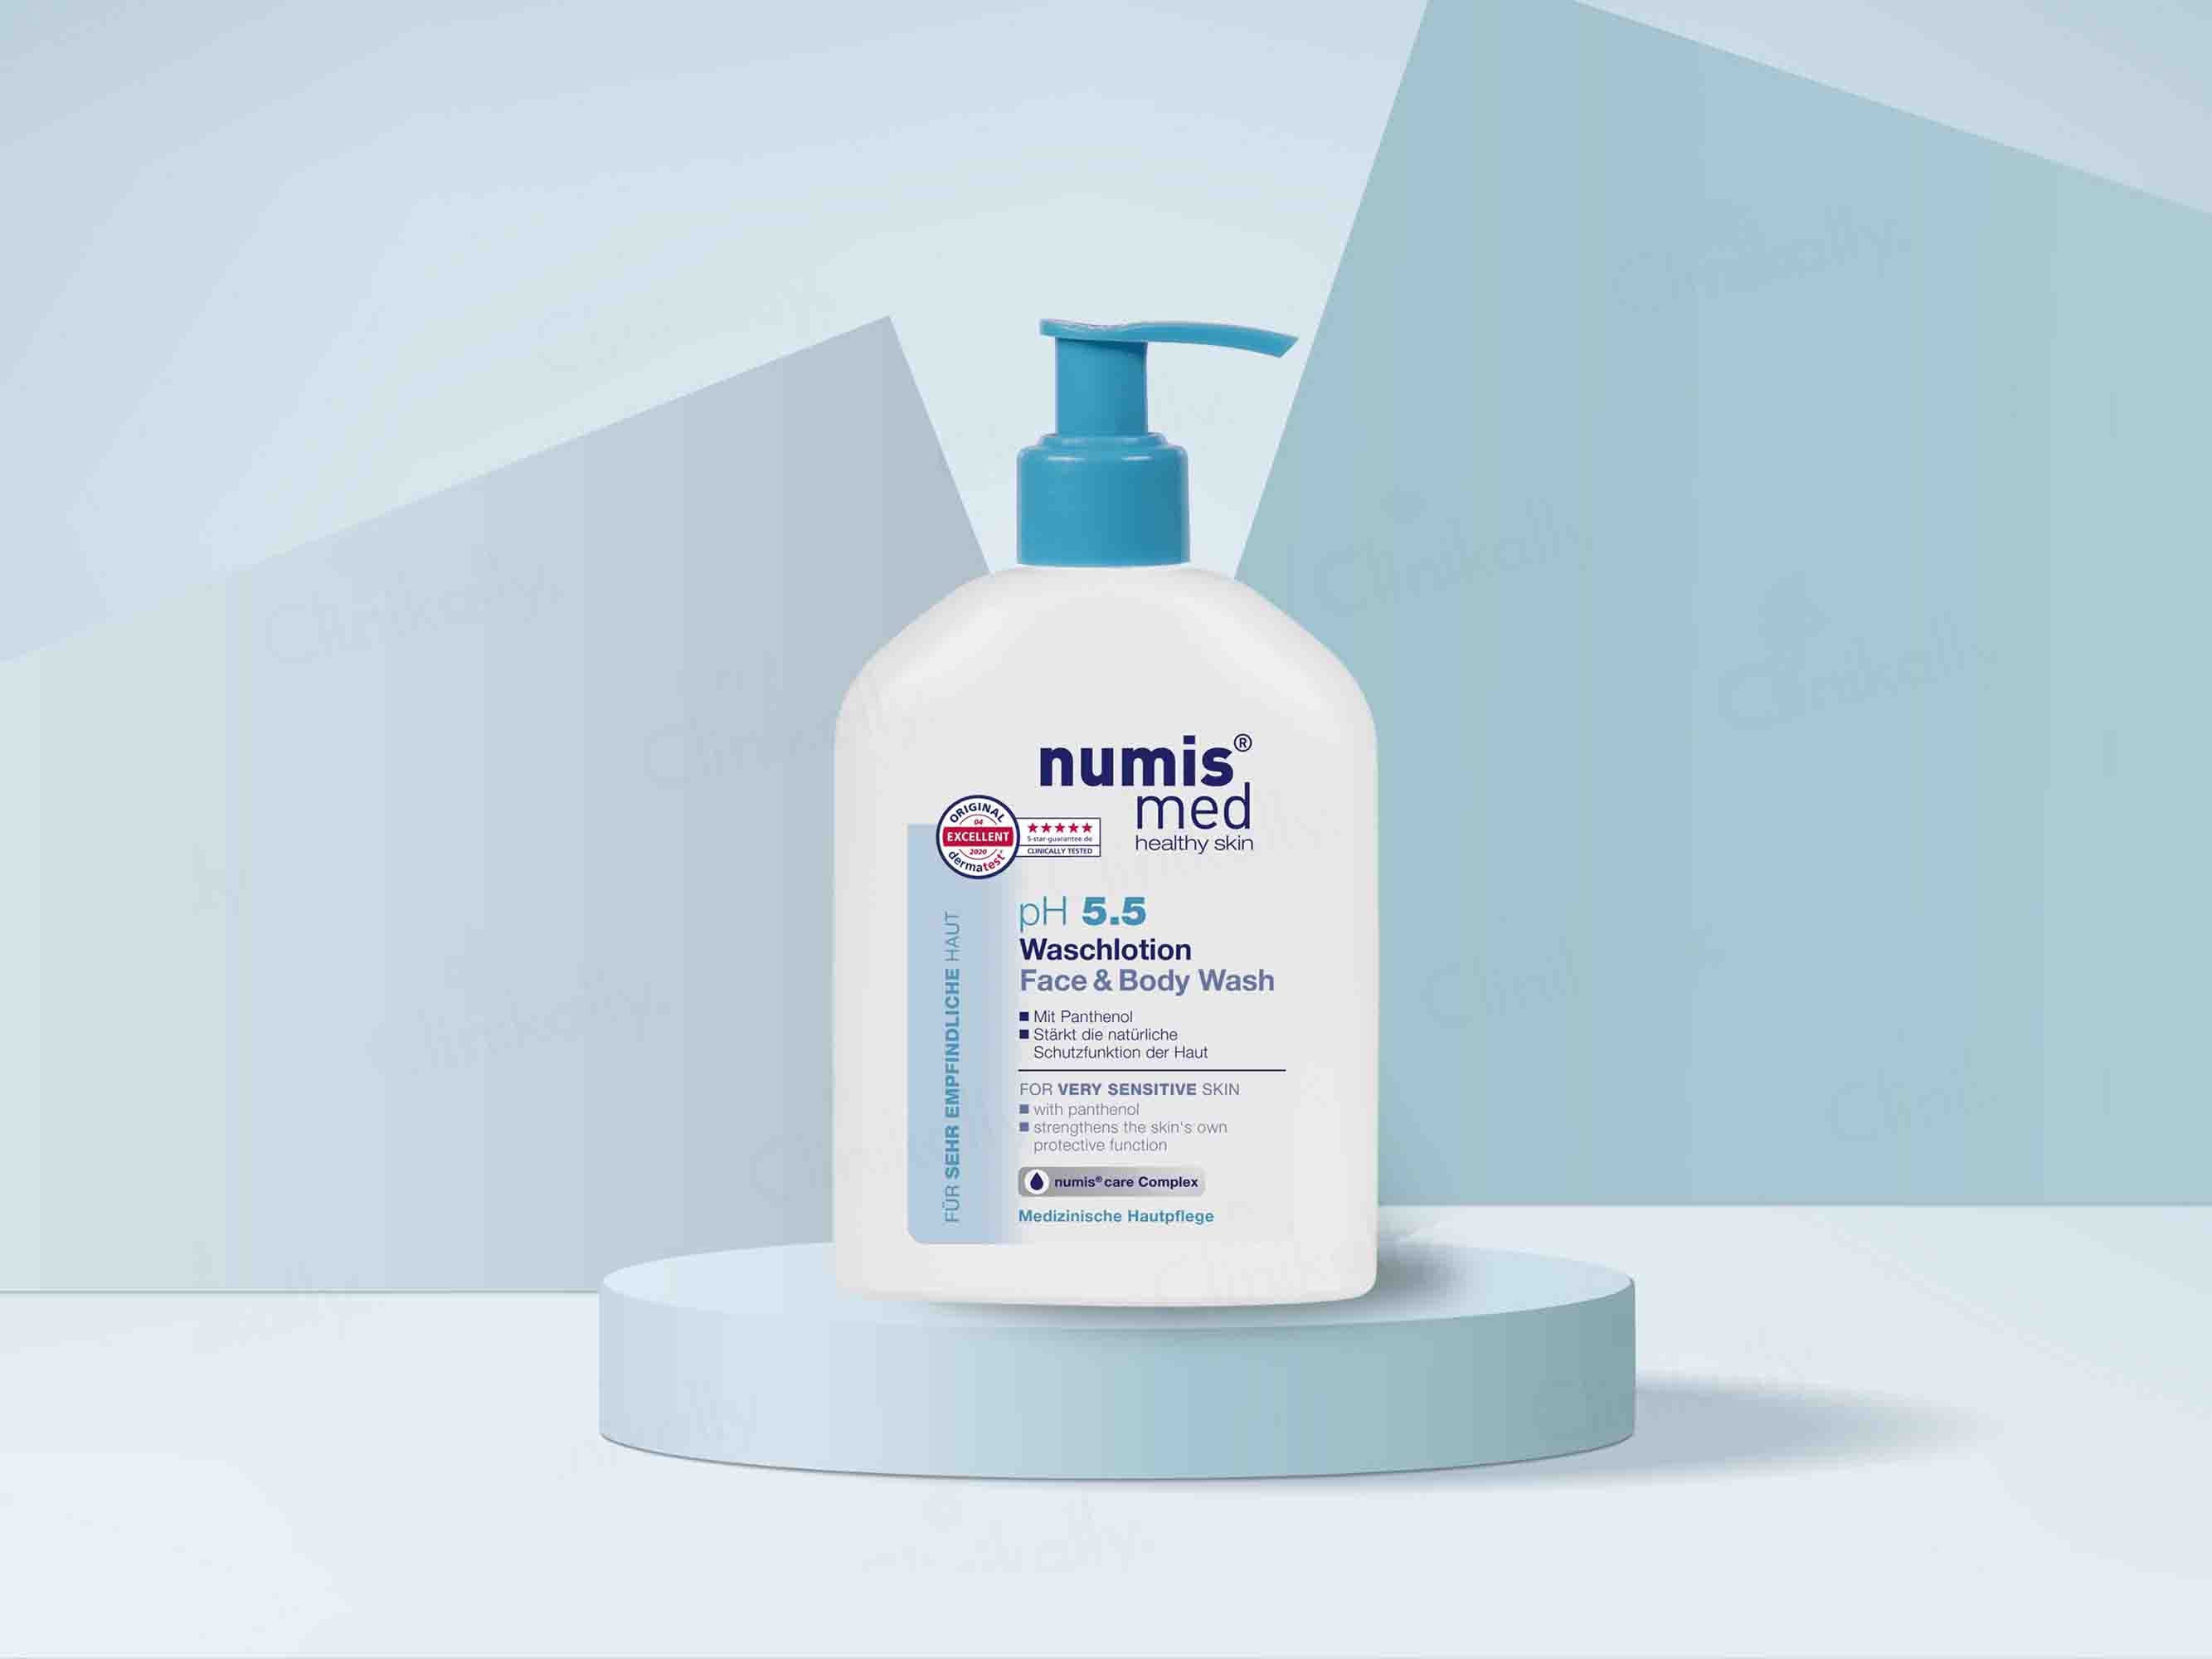 Numis Med pH 5.5 Face & Body Wash For Very Sensitive Skin - Clinikally